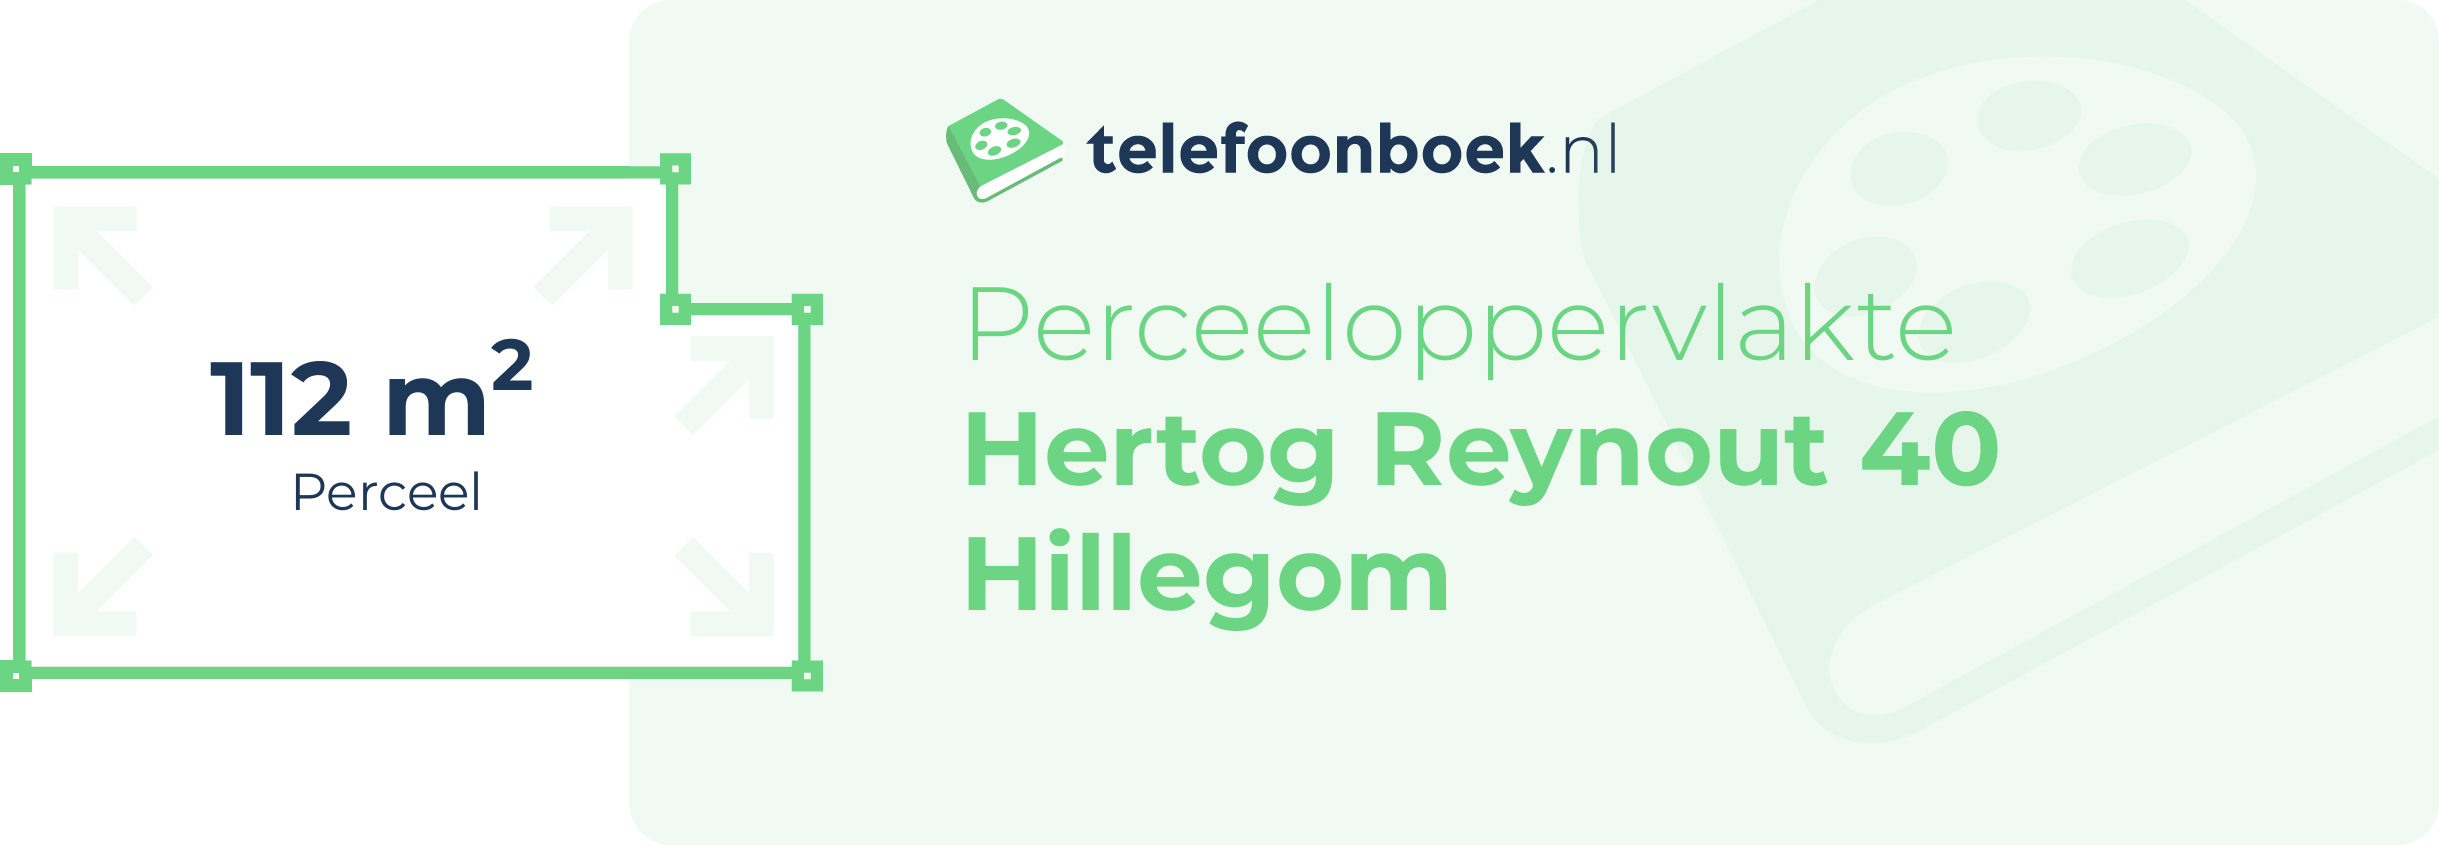 Perceeloppervlakte Hertog Reynout 40 Hillegom